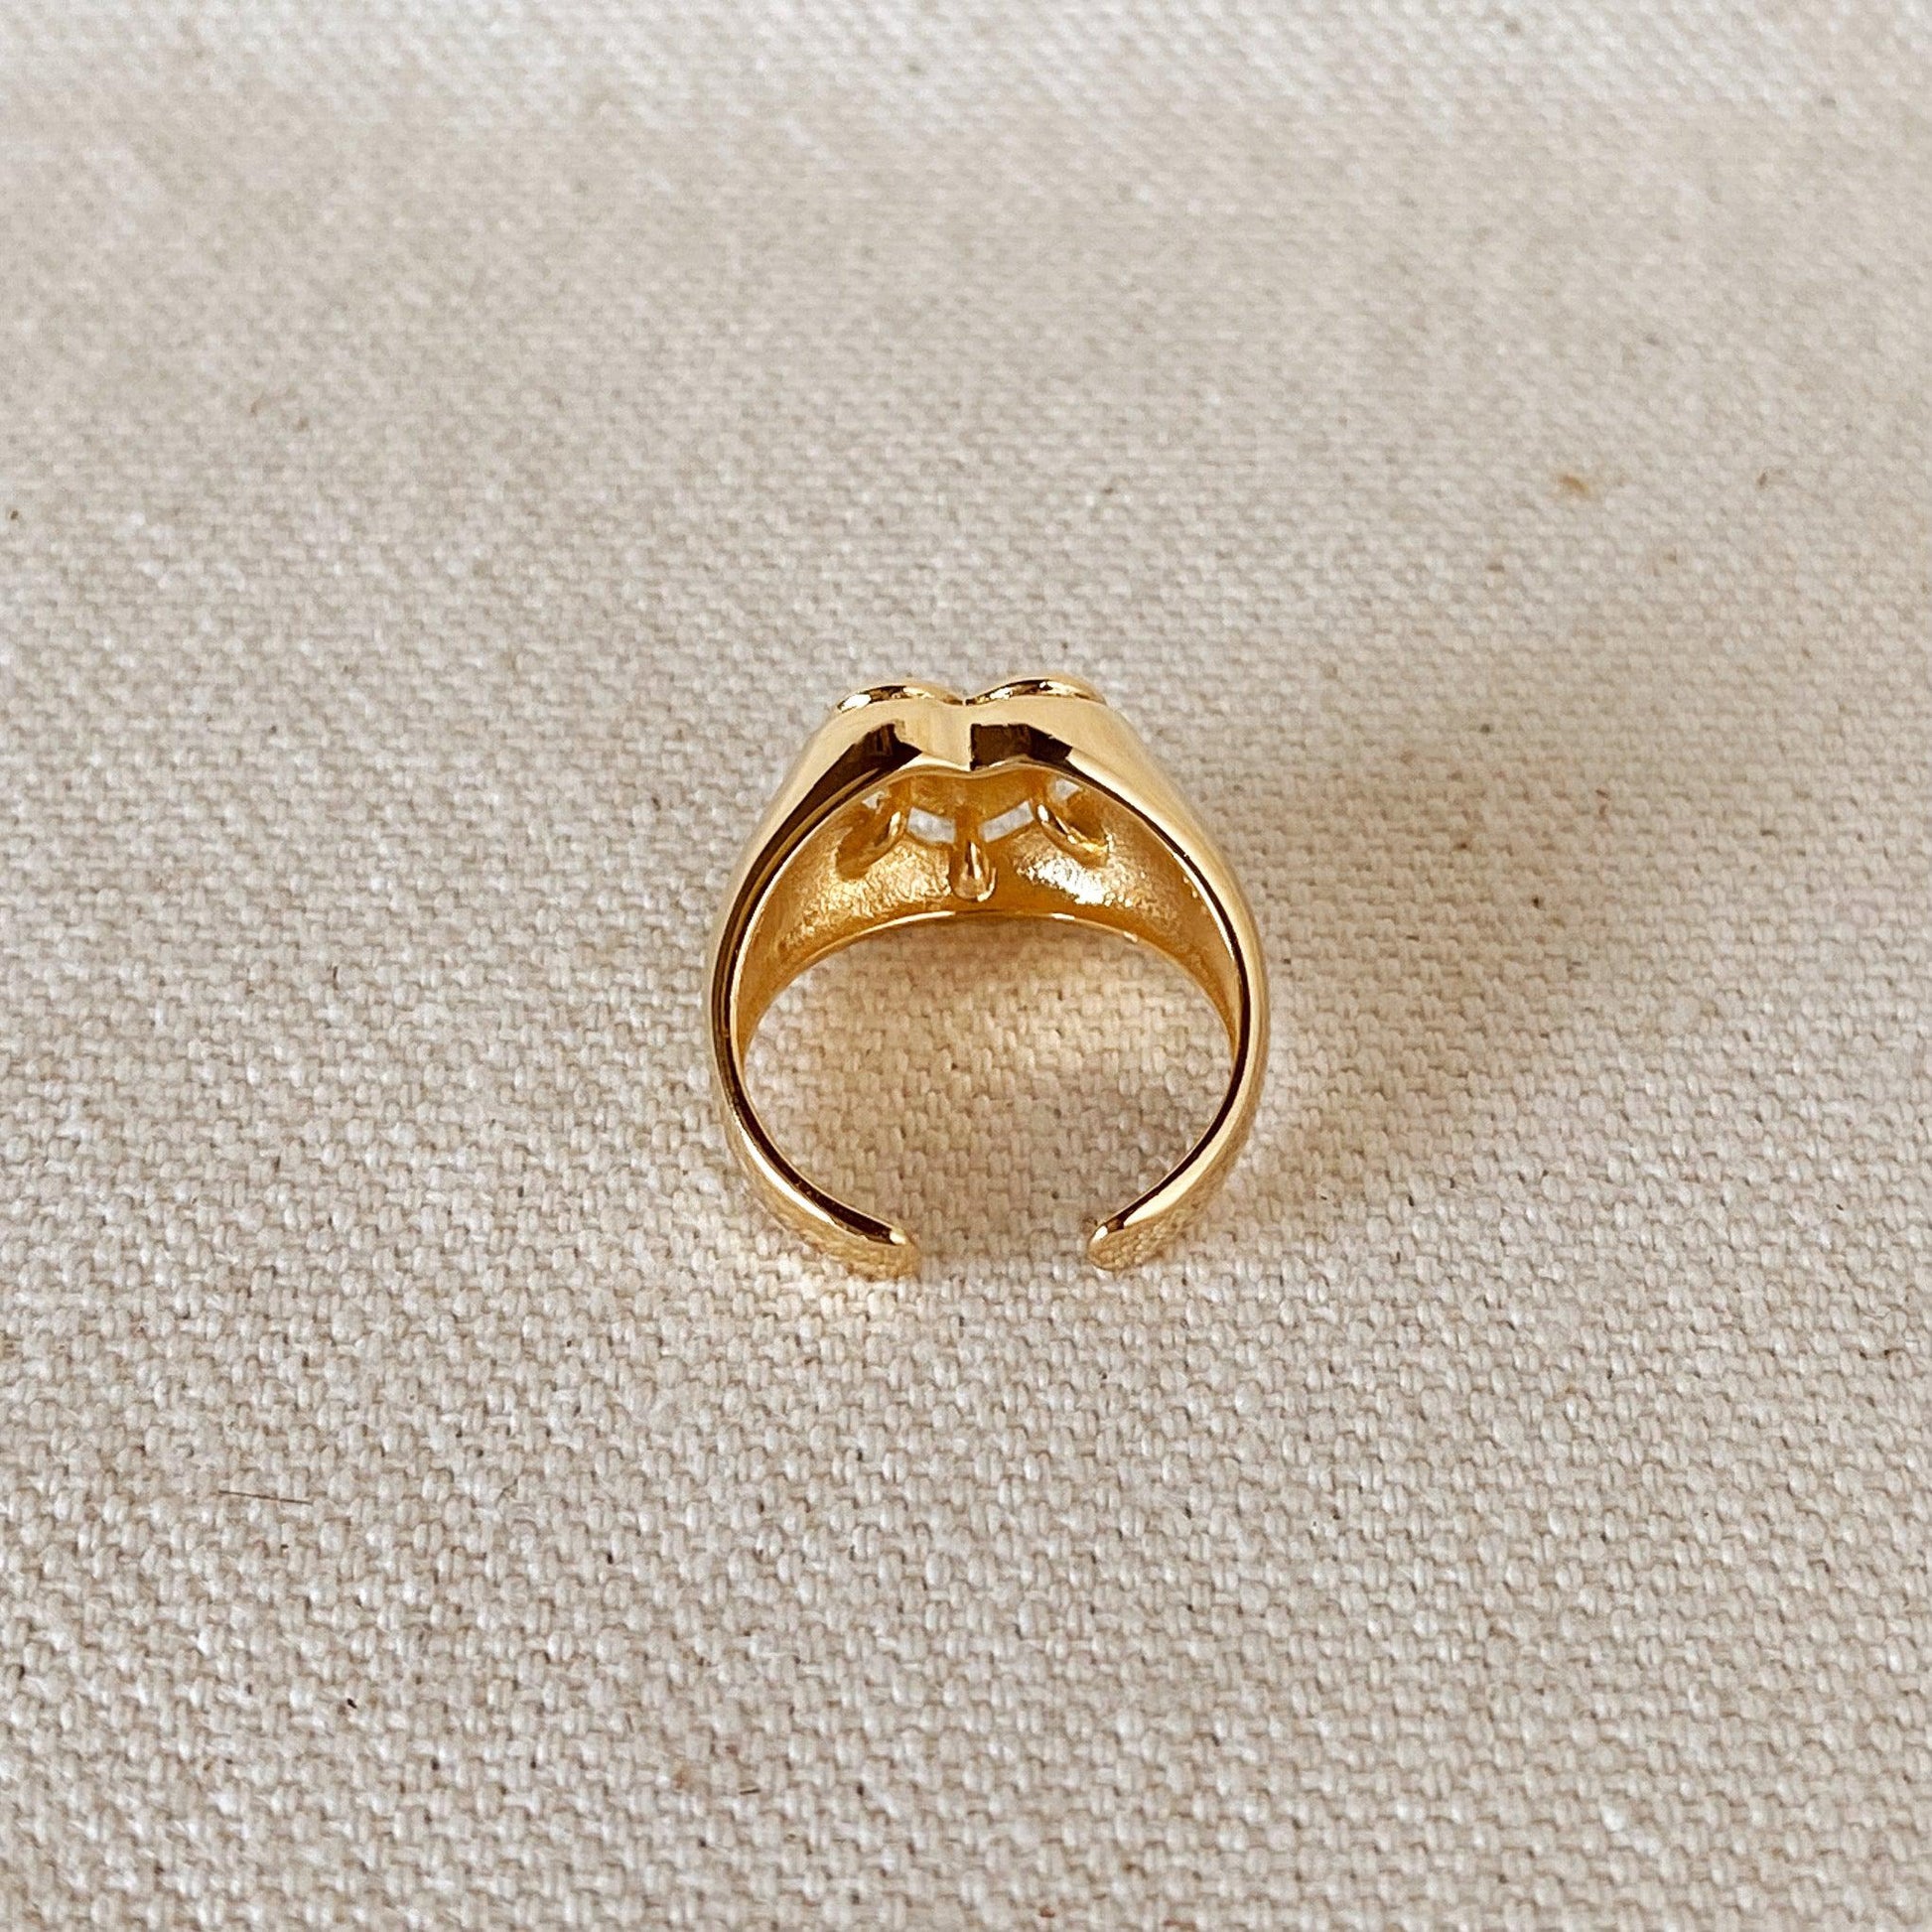 GoldFi 18k Gold Filled Pillow Heart Ring